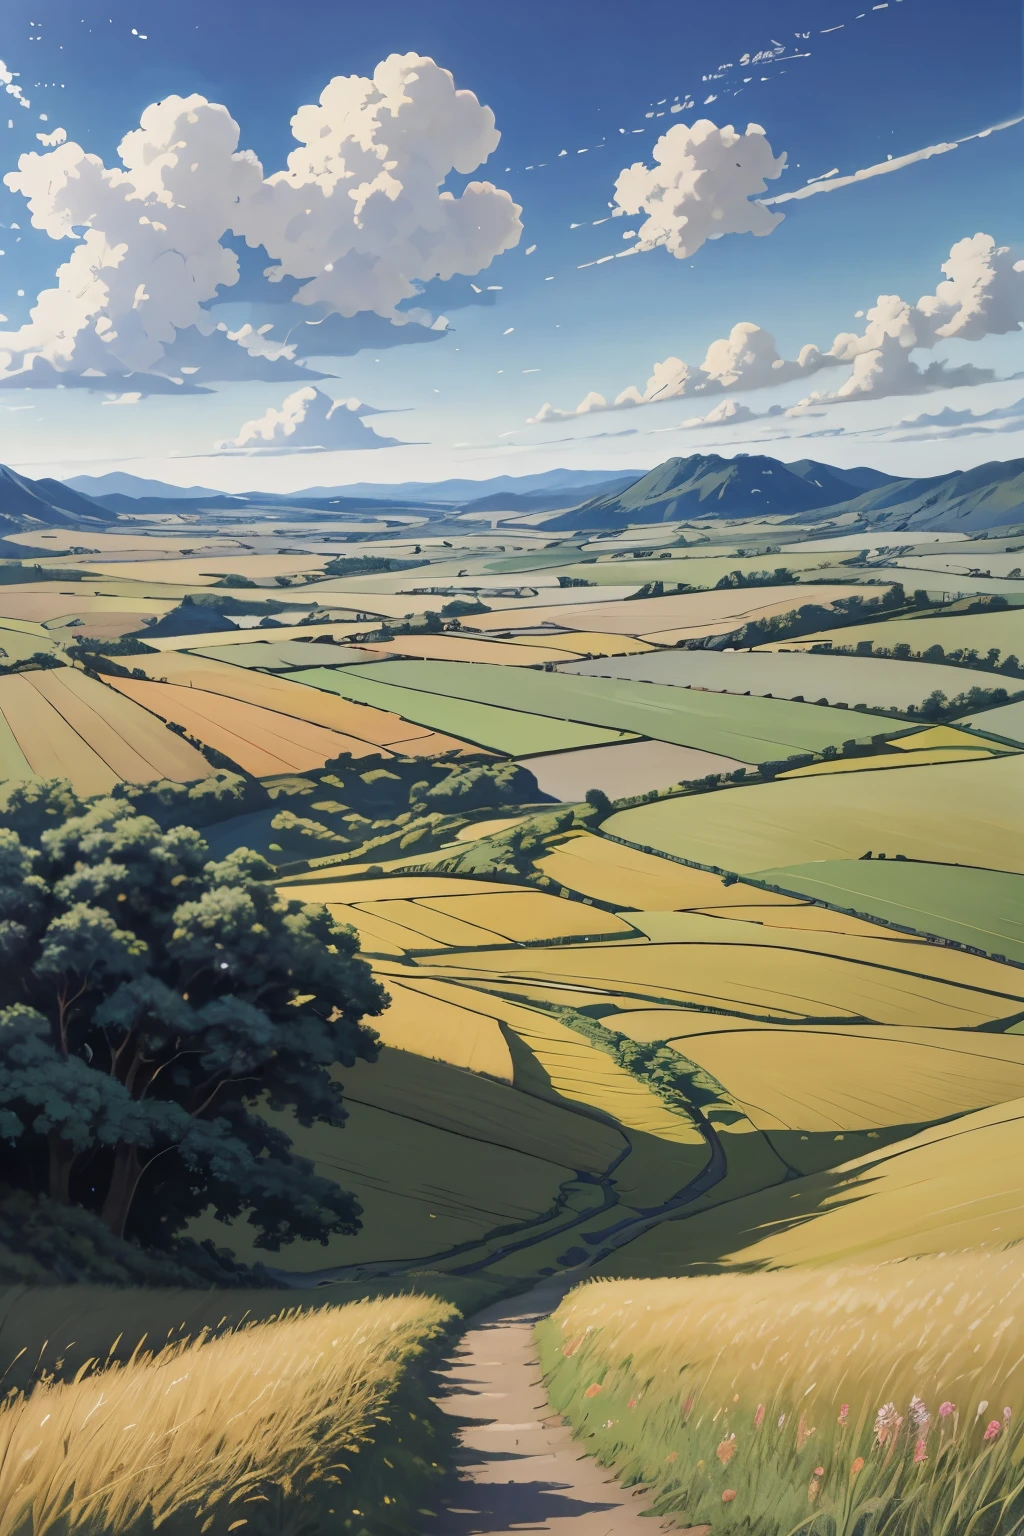 Realistic, real, beautiful and stunning landscape oil painting Studio Ghibli Hayao Miyazaki Petals Grassland Blue Sky Grassland Country Road,building, 